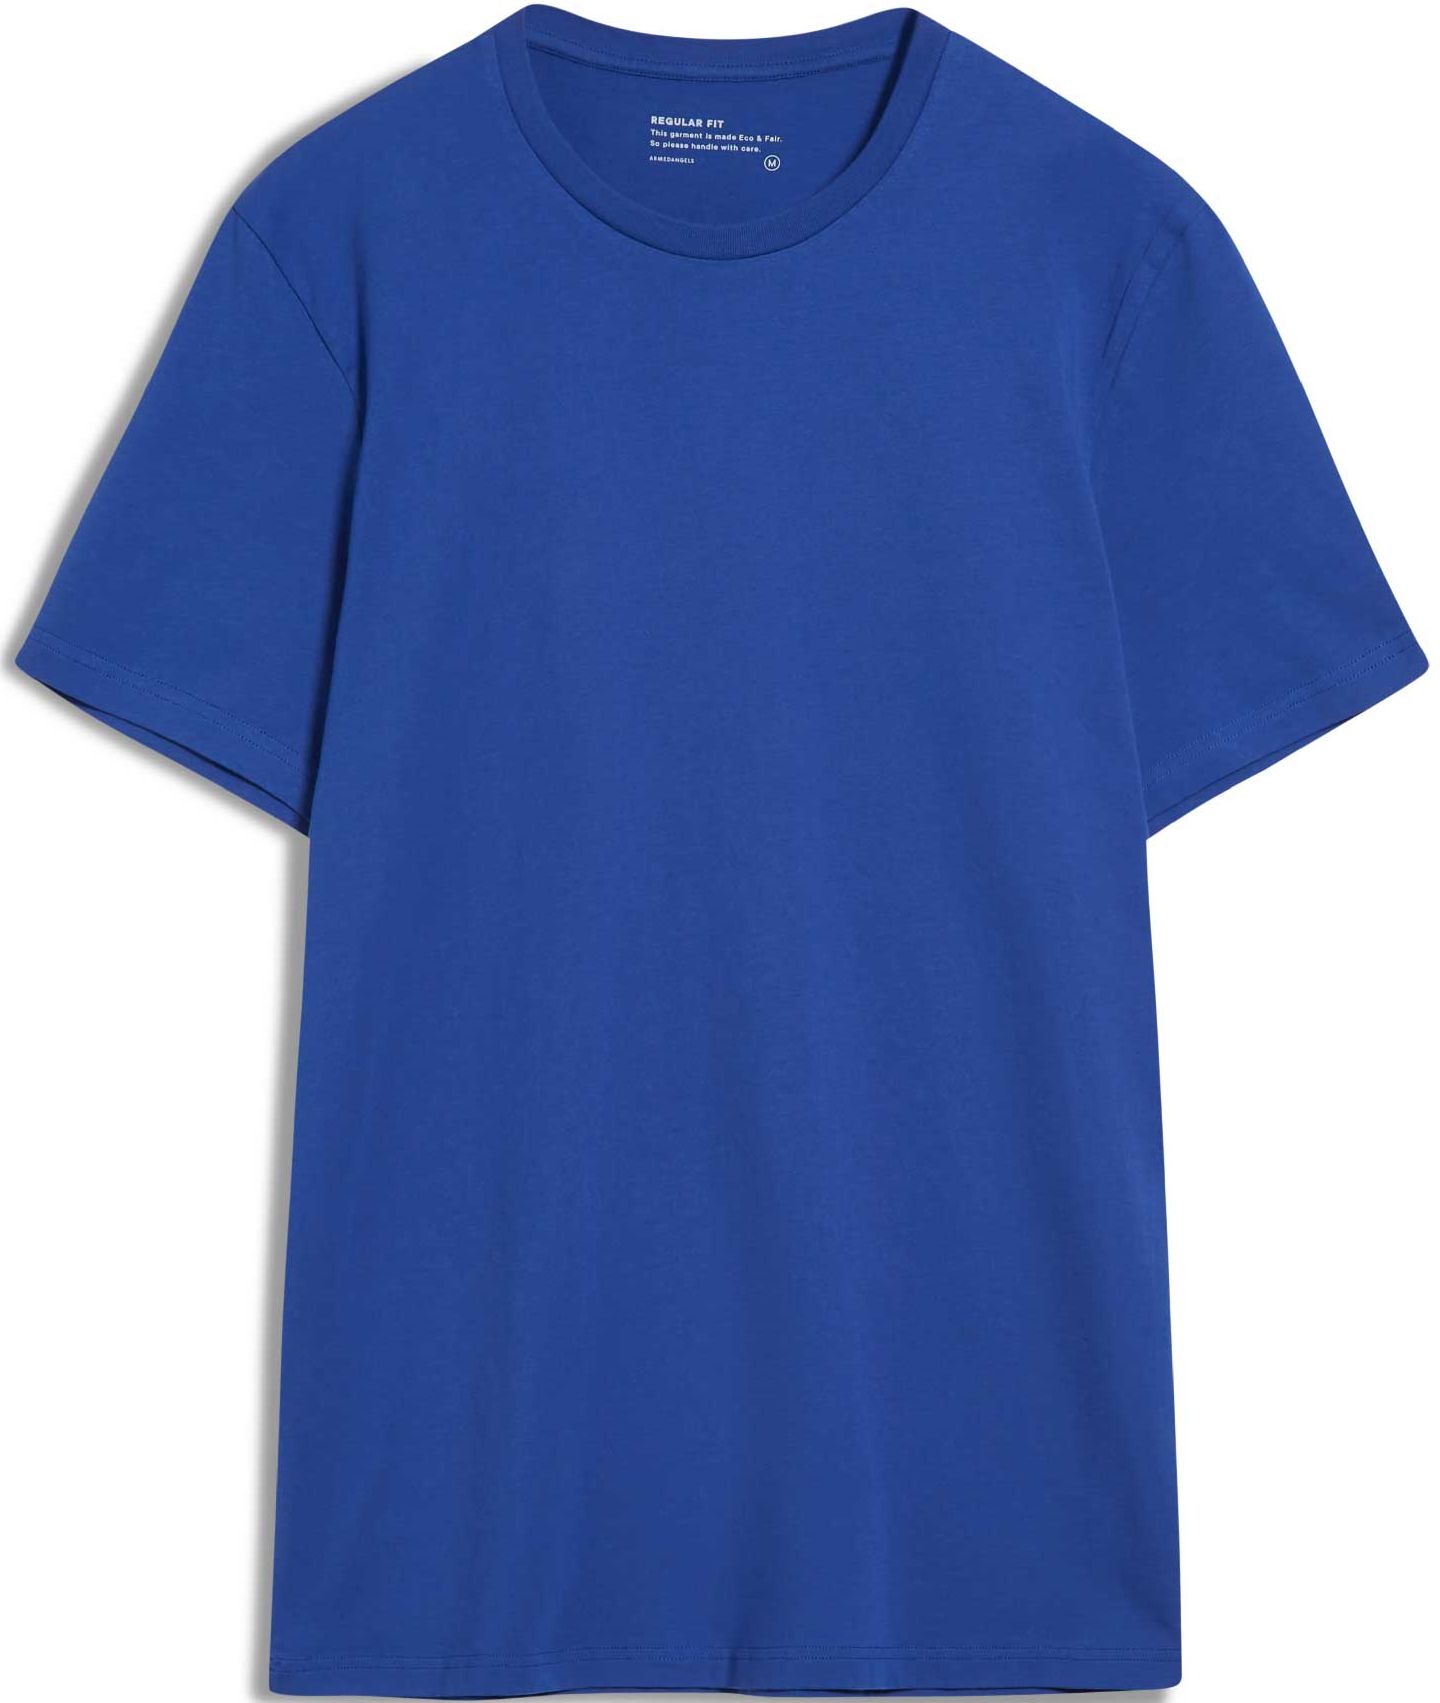 Basic Herren-Shirt JAAMES marazine blue